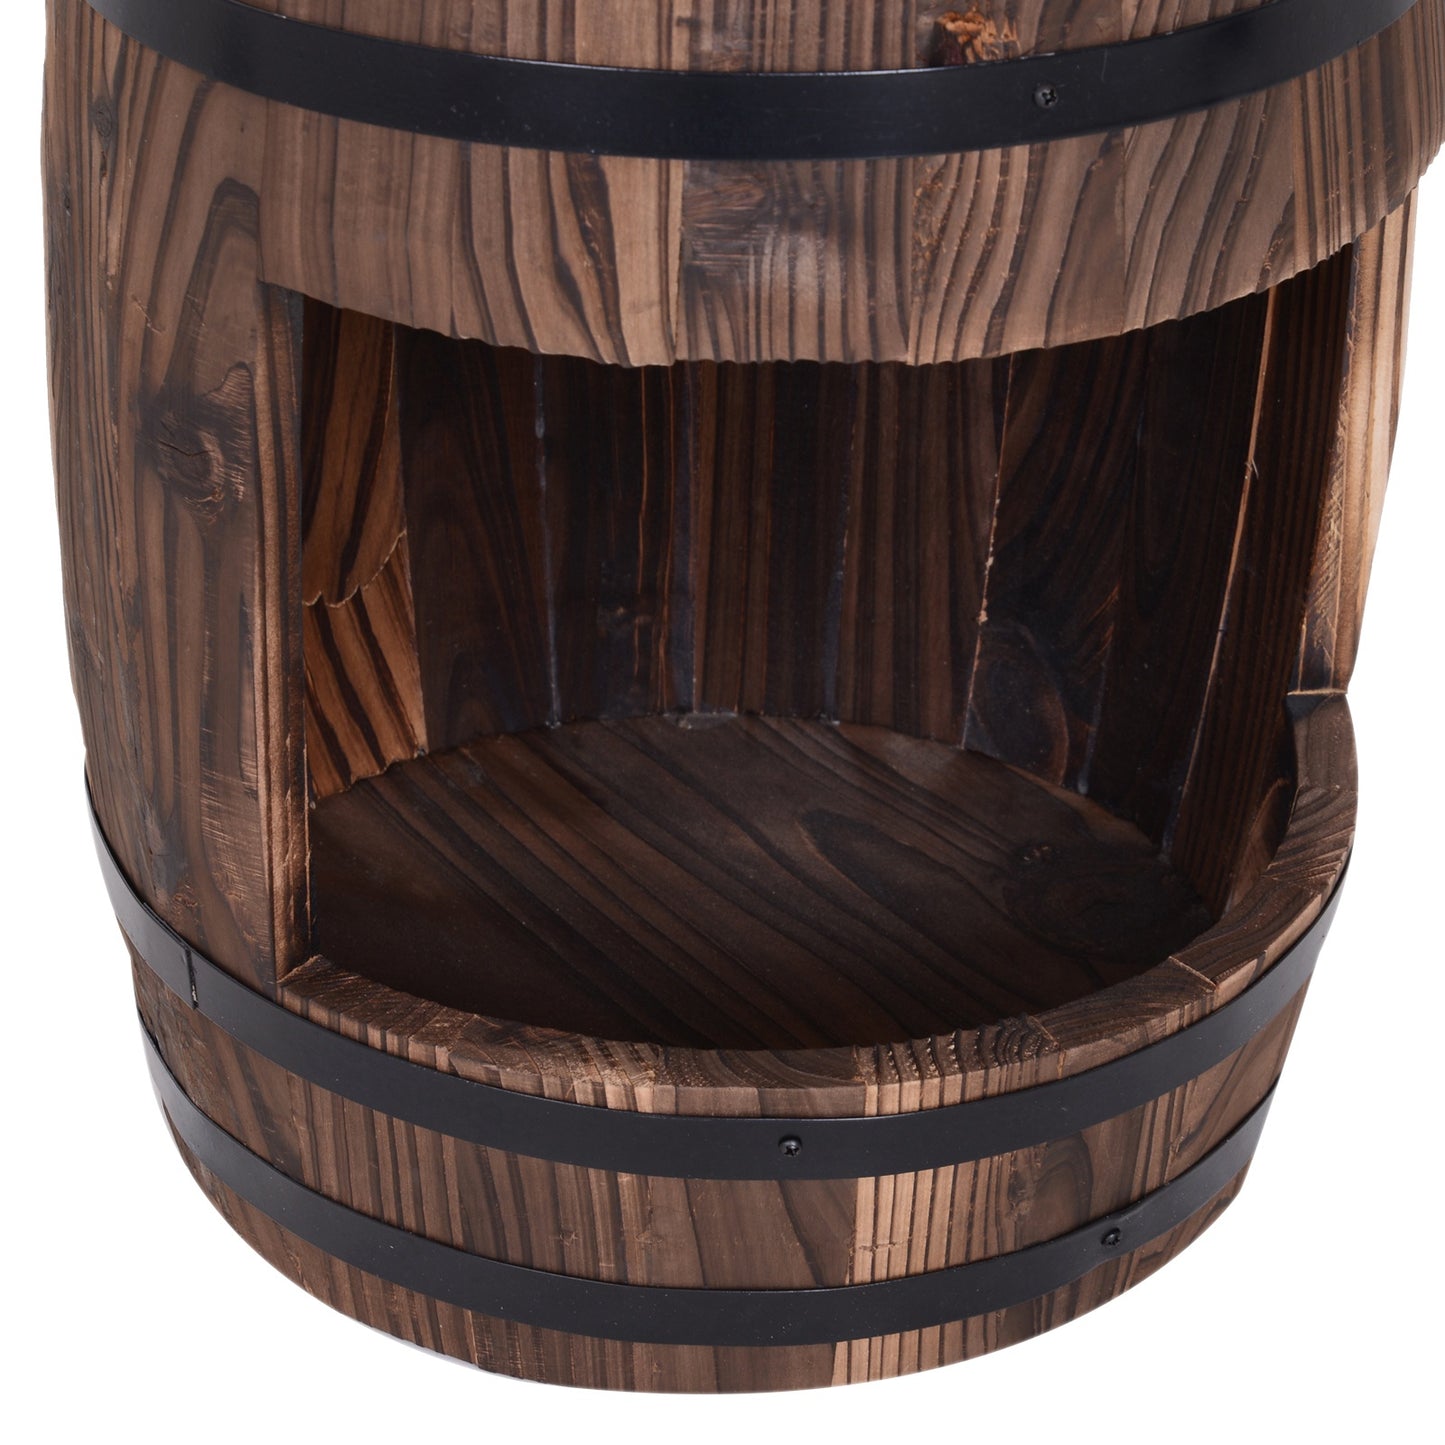 Outsunny Fir Wood Barrel Pump Fountain W/ Flower Planter, Φ32x58.5H cm